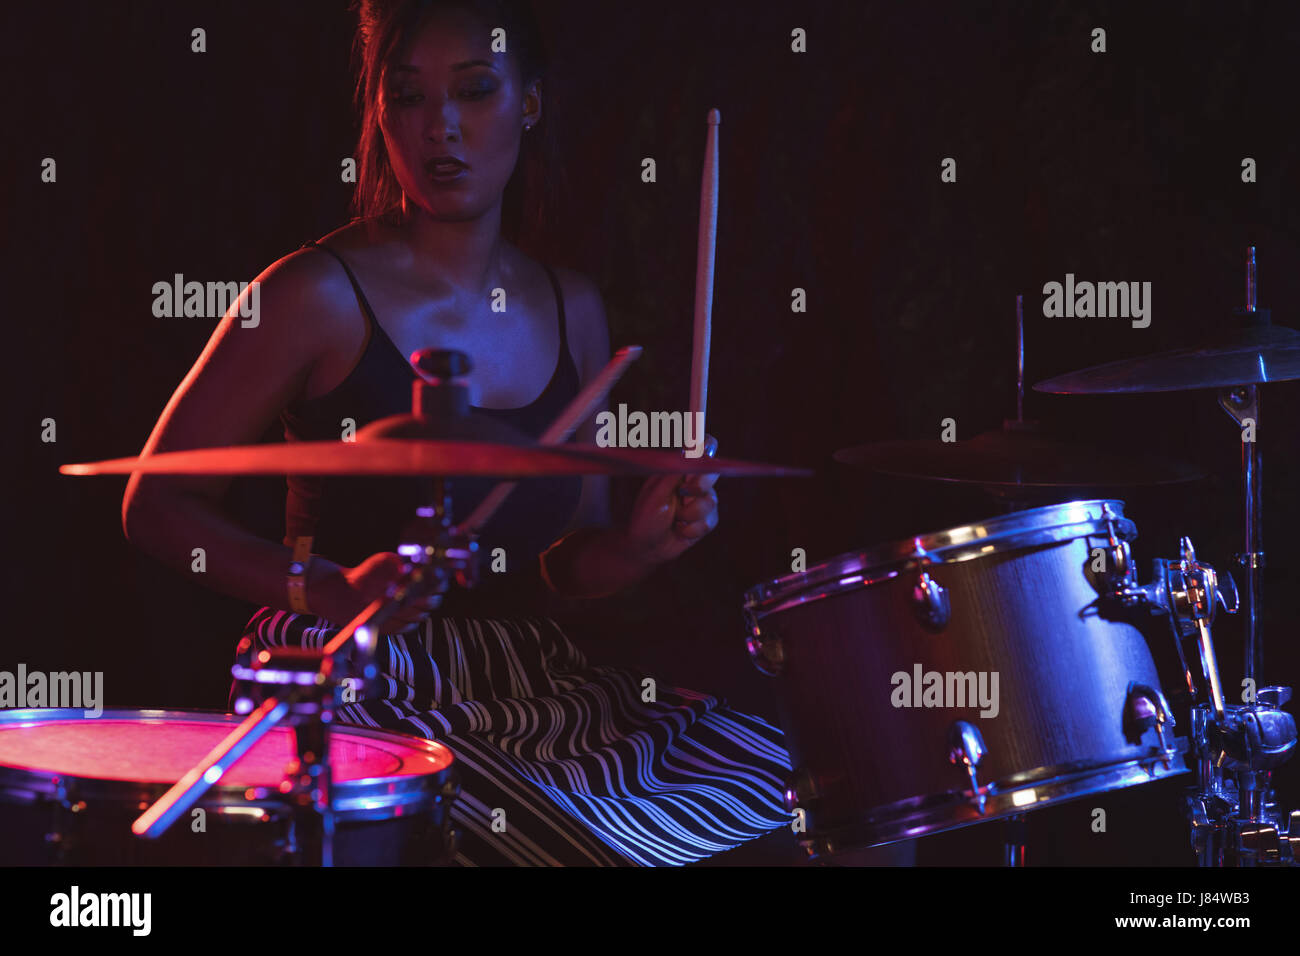 Confident female drummer playing drum kit in nightclub Stock Photo